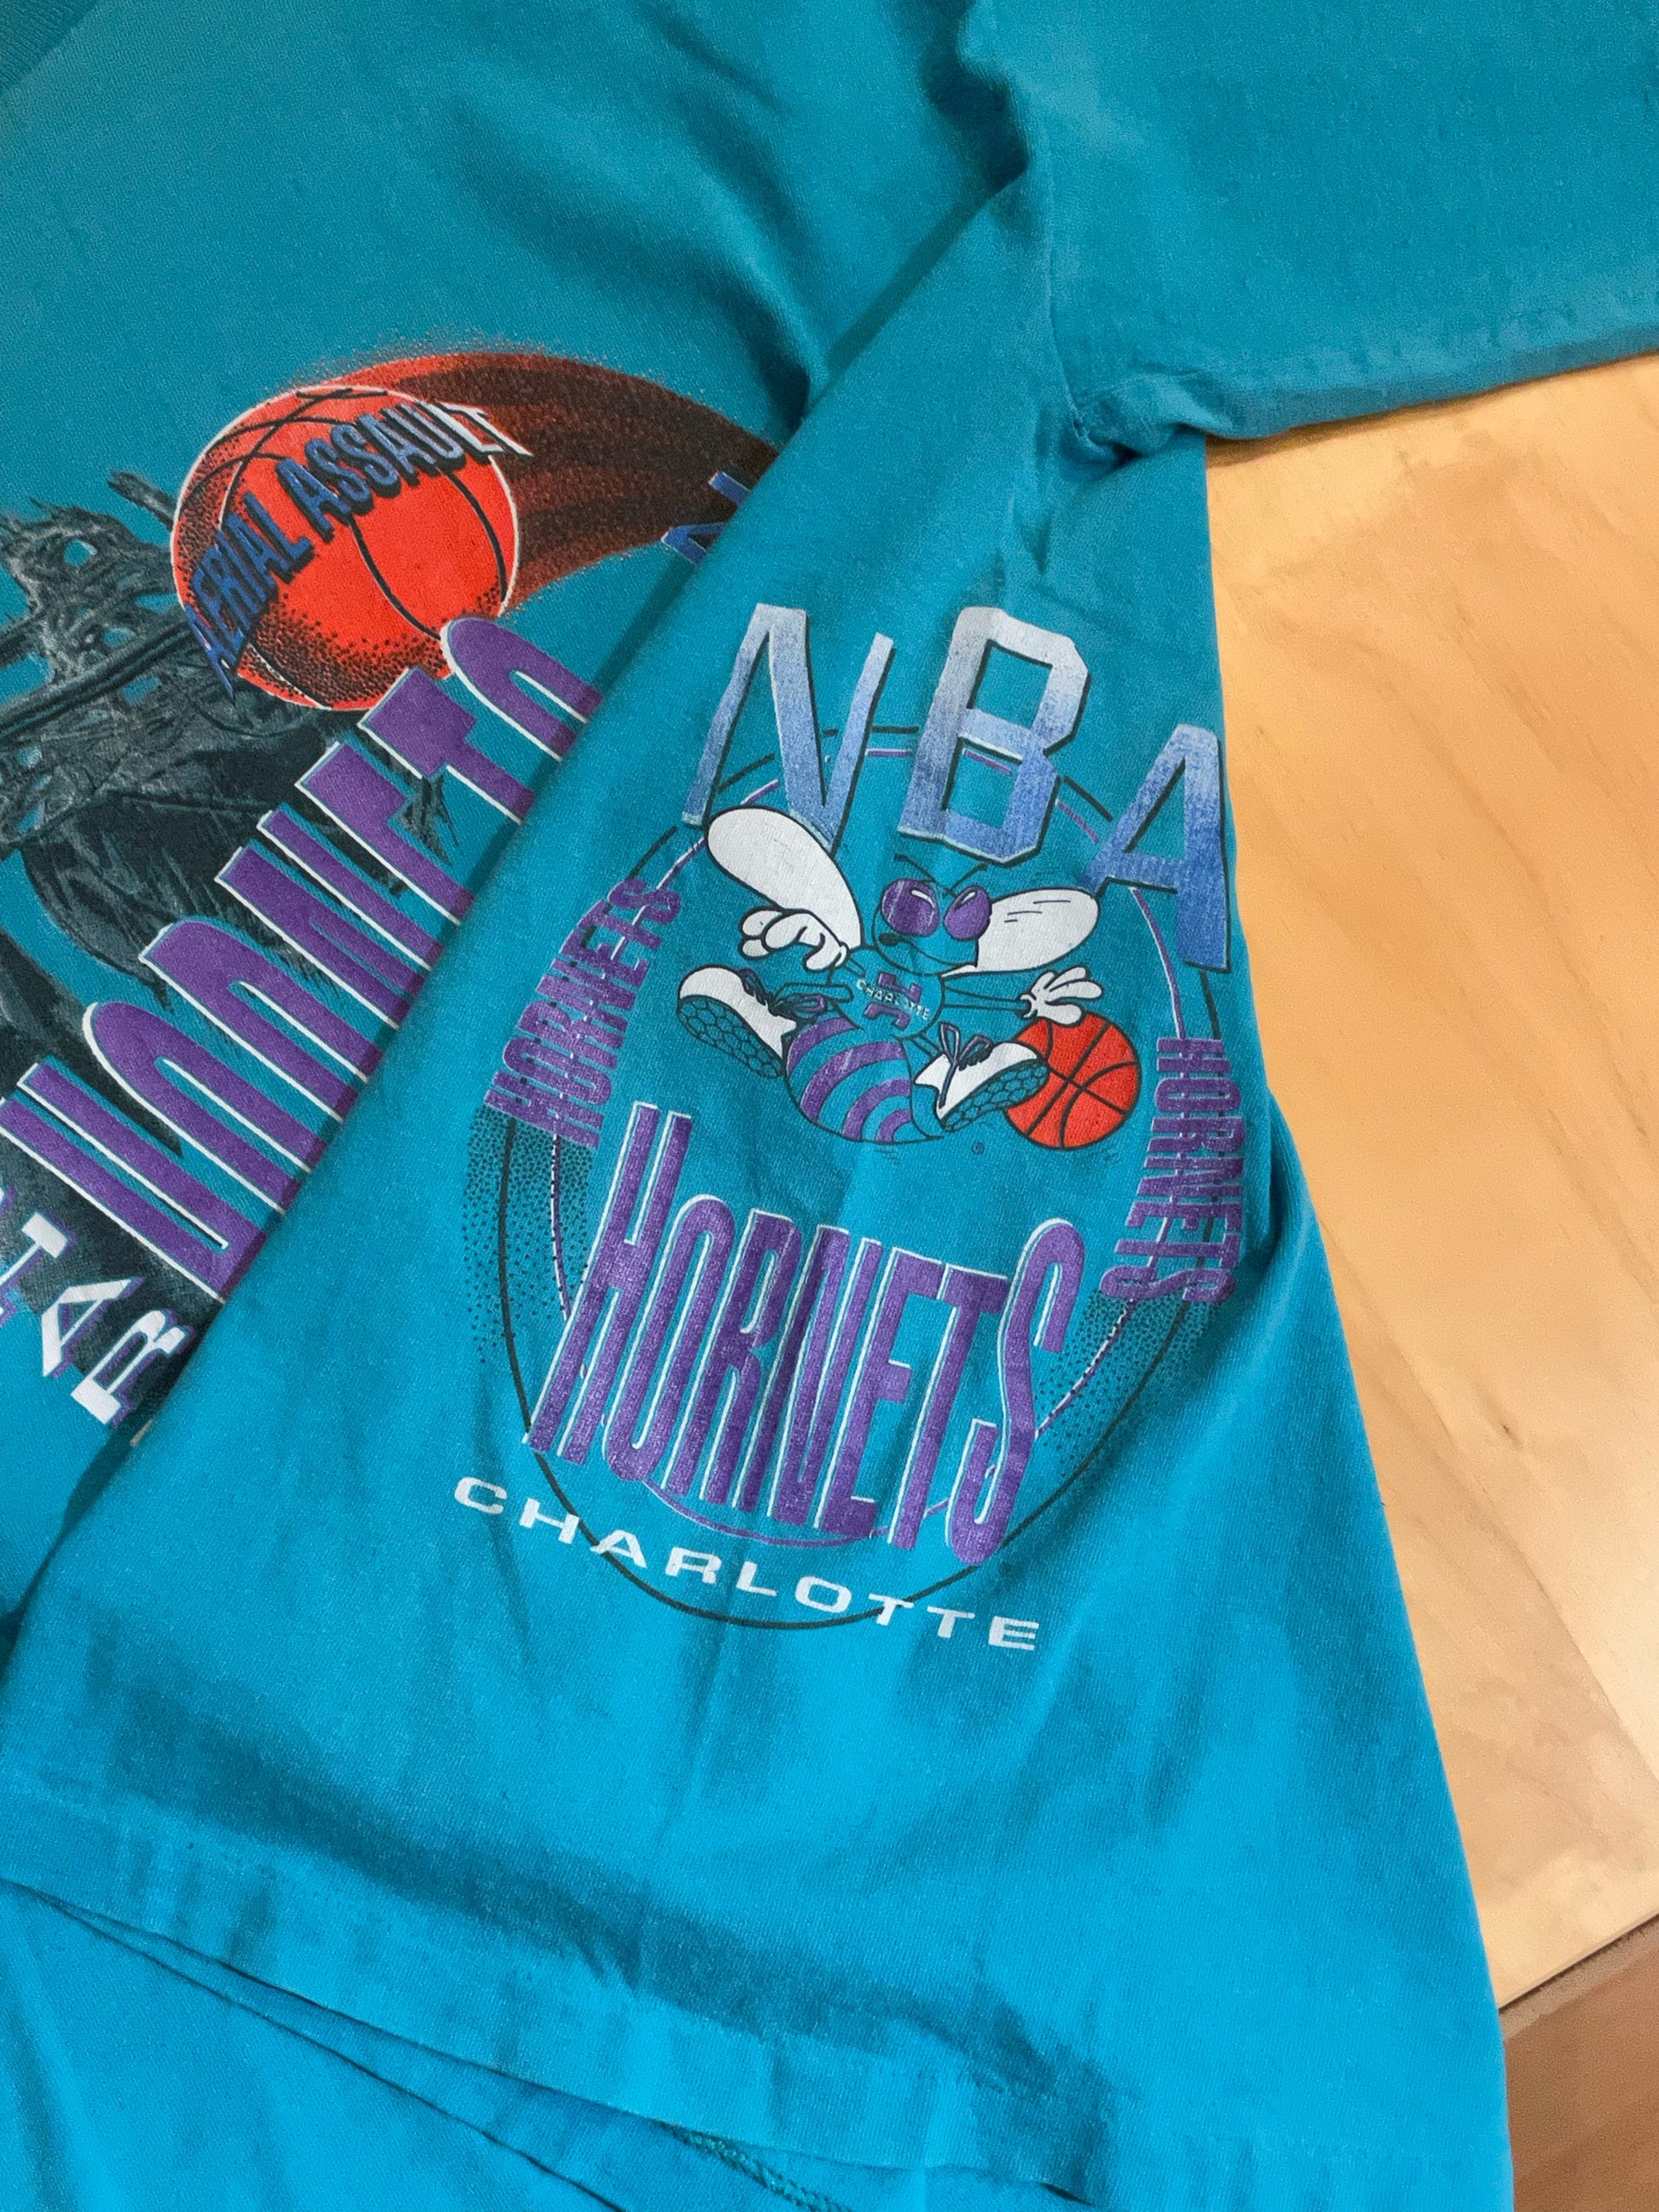 NBA, Shirts, Nba Charlotte Hornets Hoodie And Hat